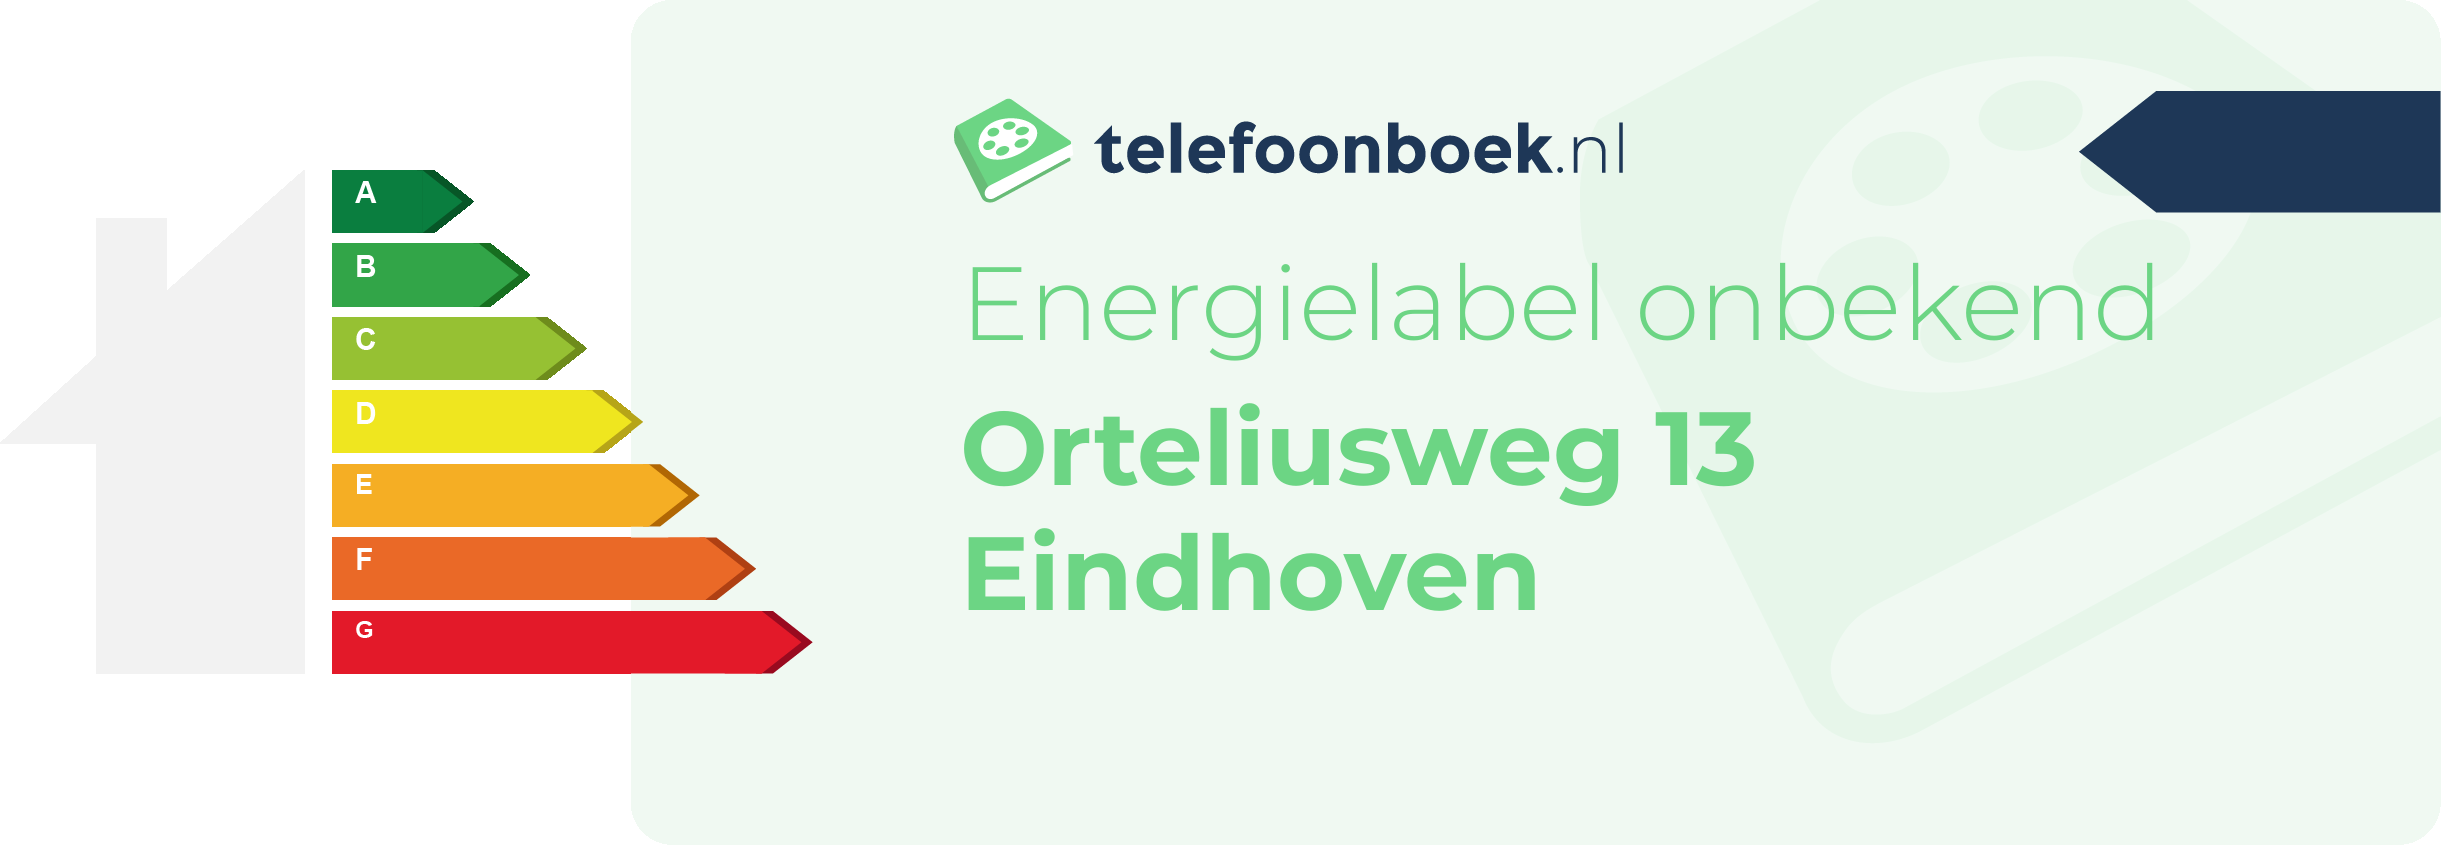 Energielabel Orteliusweg 13 Eindhoven